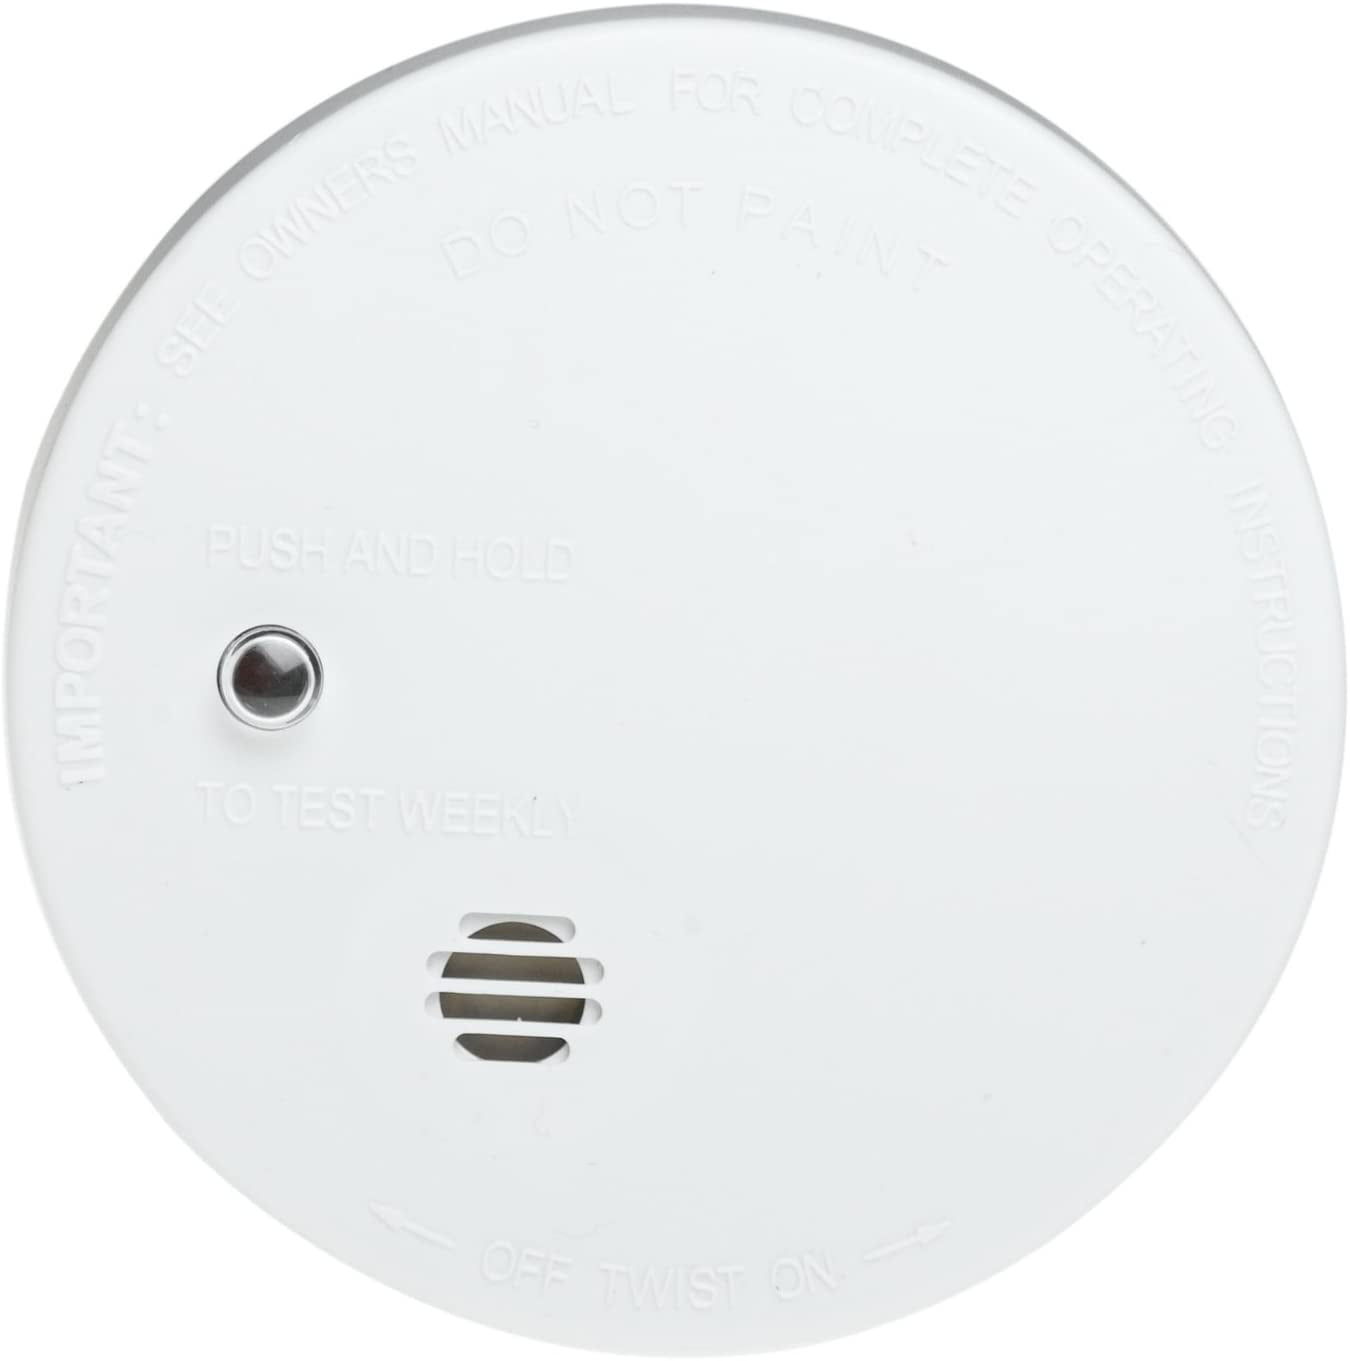 Kidde I9040 Ionization Sensor Compact Smoke Alarm for sale online 